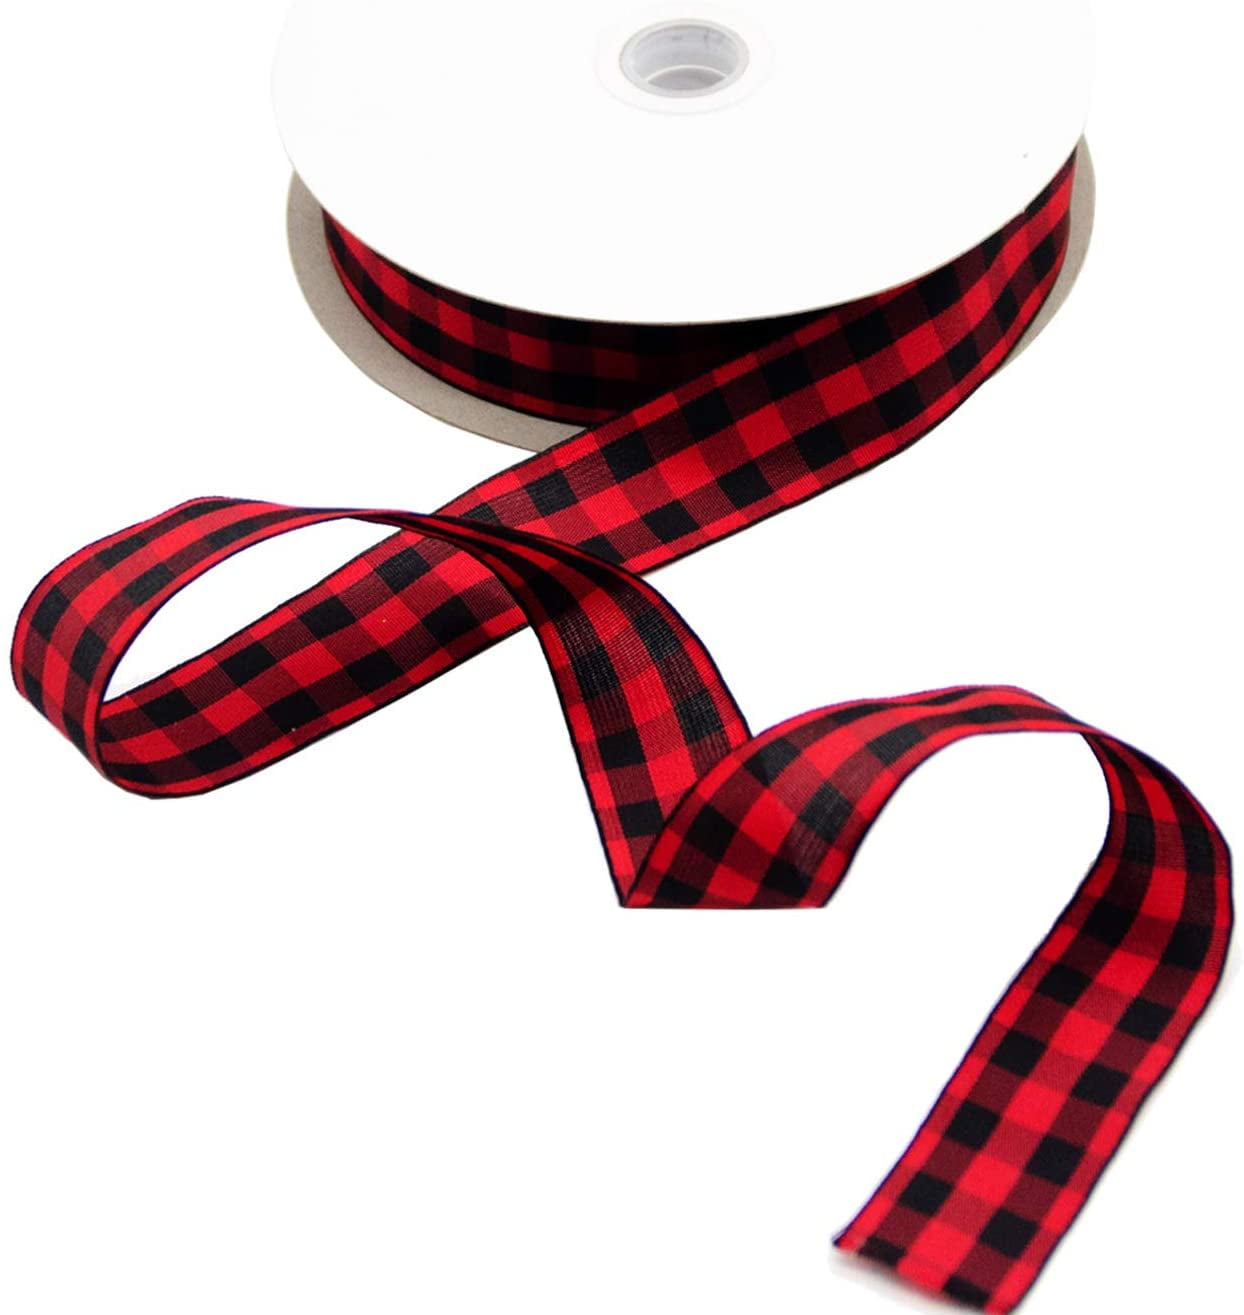 Buffalo plaid pattern in red and black on grosgrain ribbon 1.5 width headband